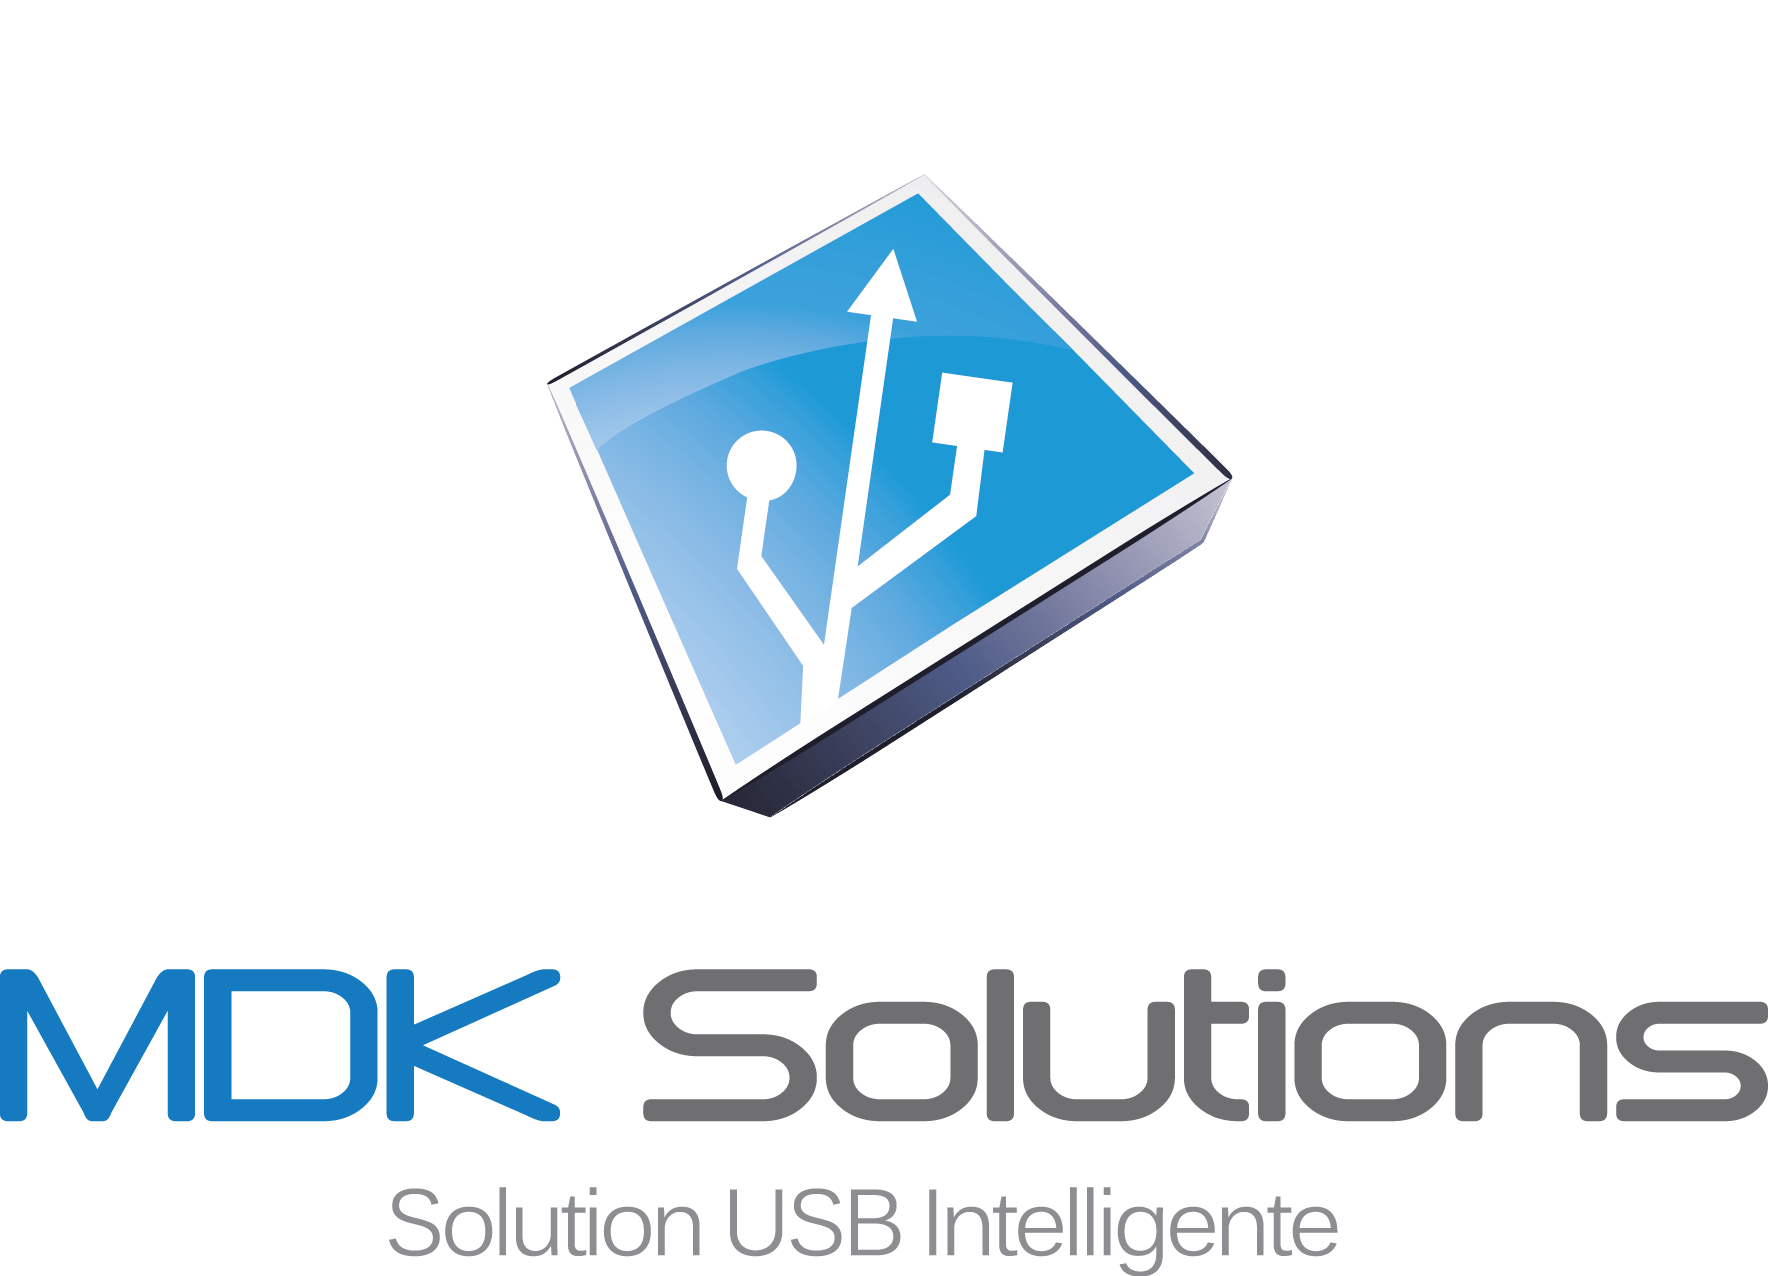 MDK Solutions